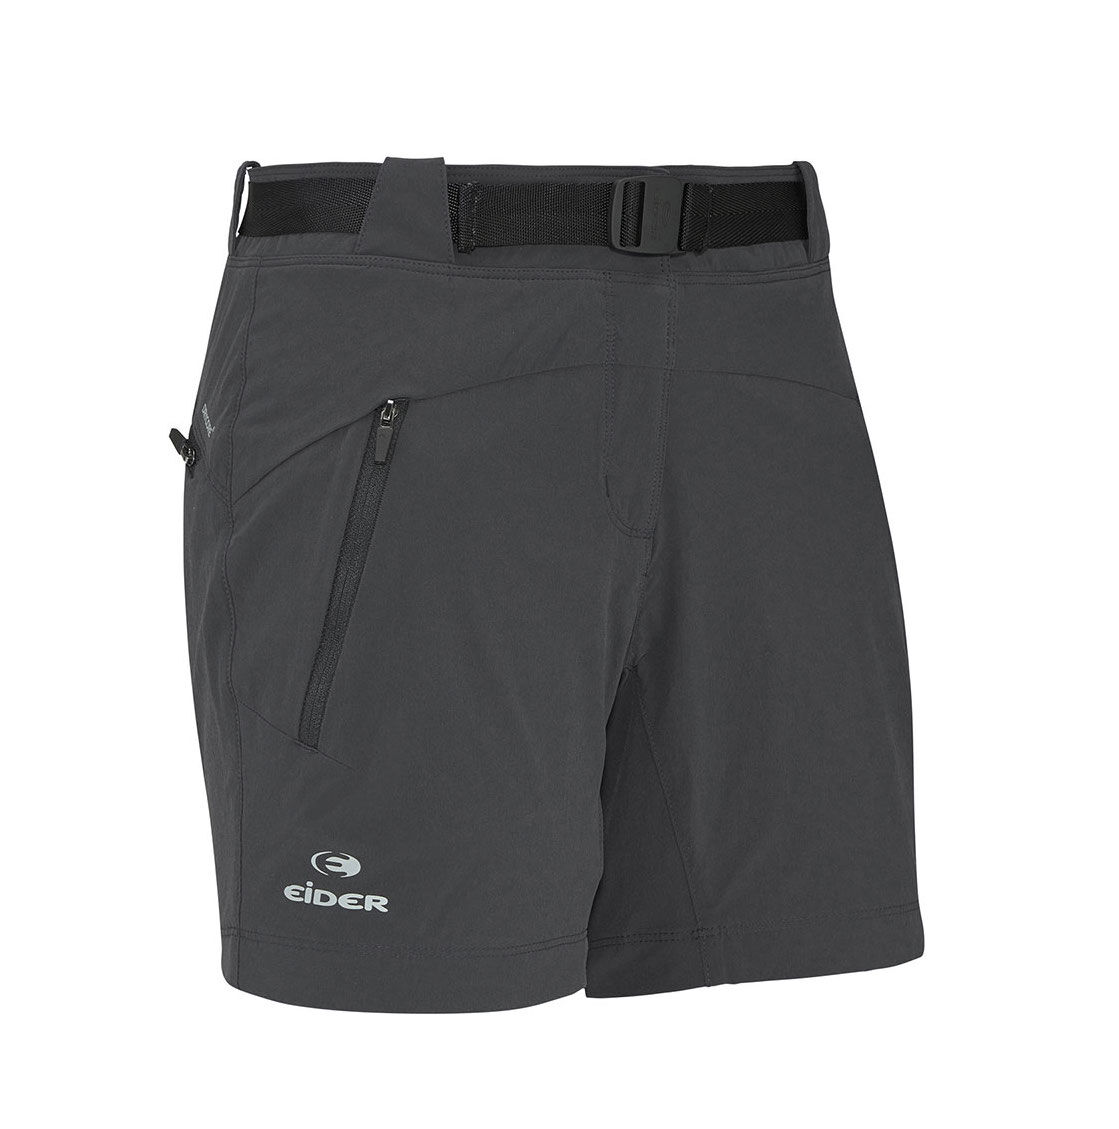 Eider - Flex Short W - Shorts - Women's